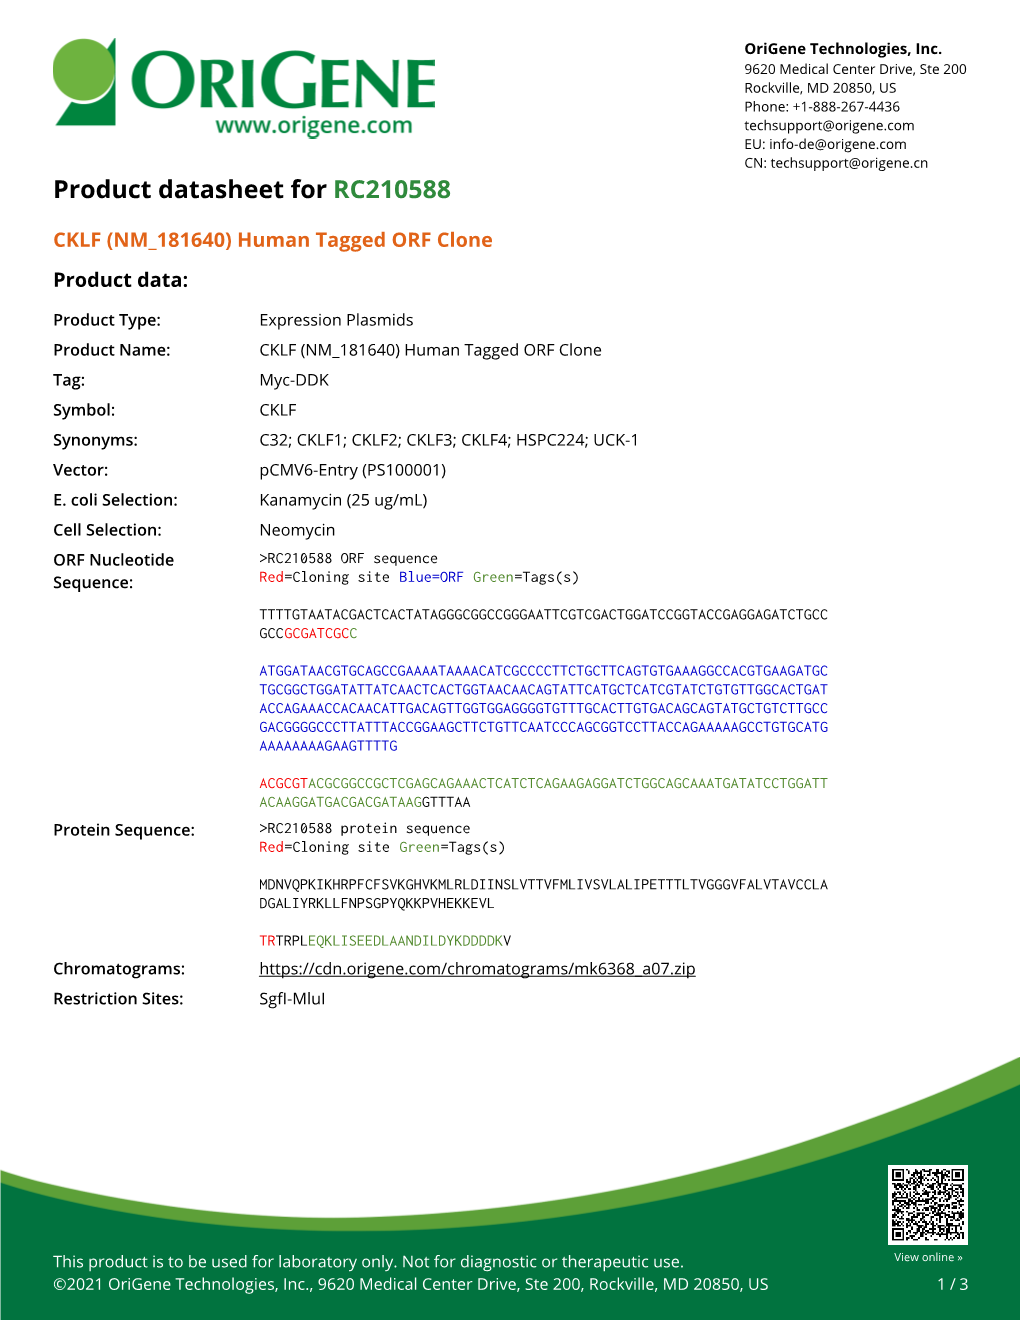 CKLF (NM 181640) Human Tagged ORF Clone Product Data